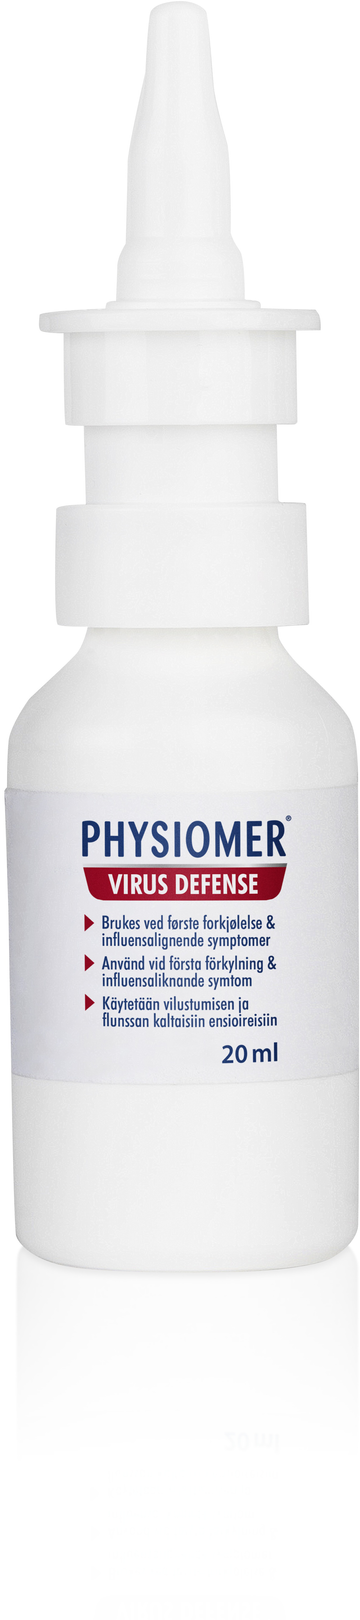 Physiomer Virus Defense